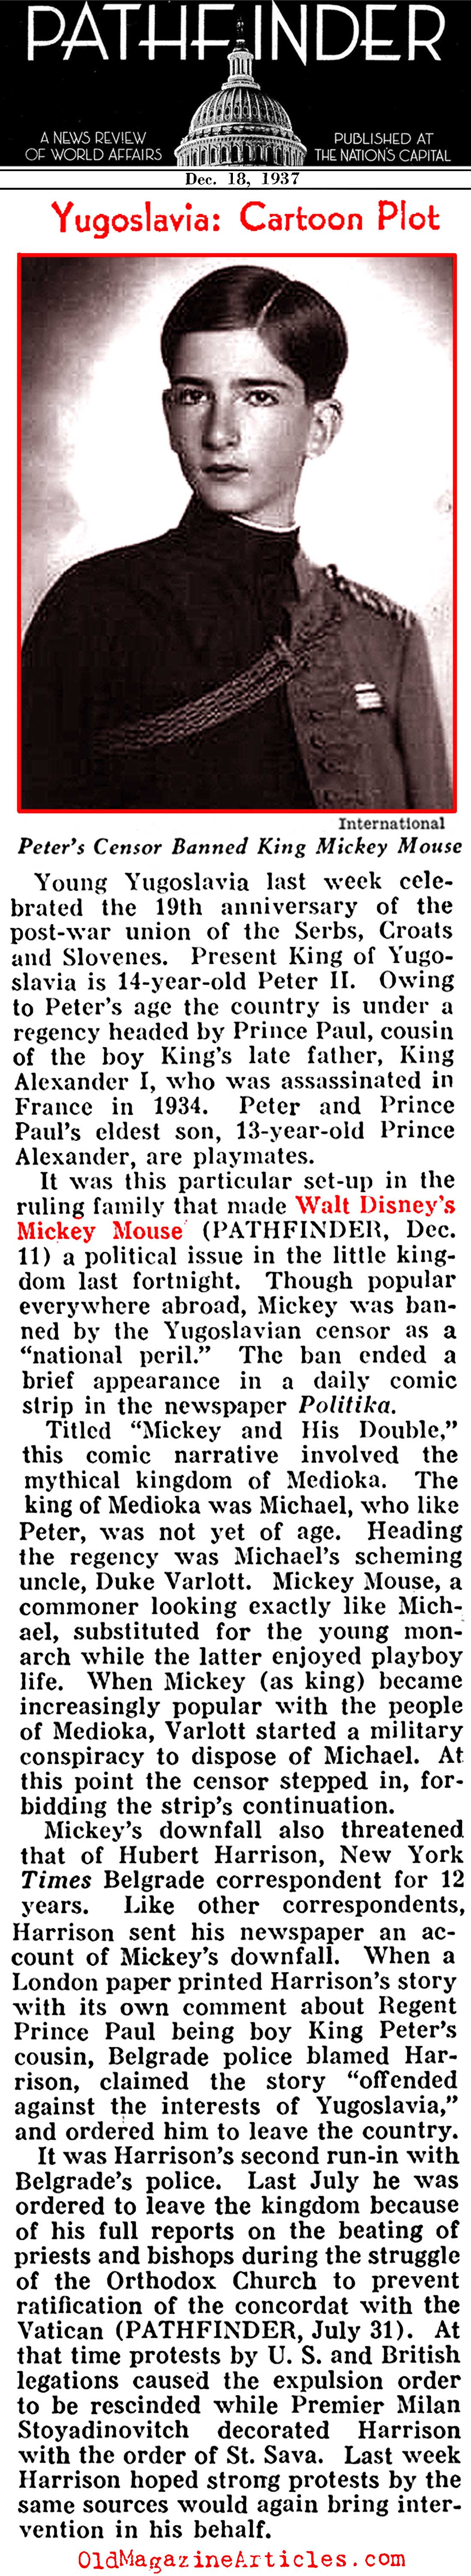 Mickey Mouse Banned in Yugoslavia (Pathfinder Magazine, 1937)